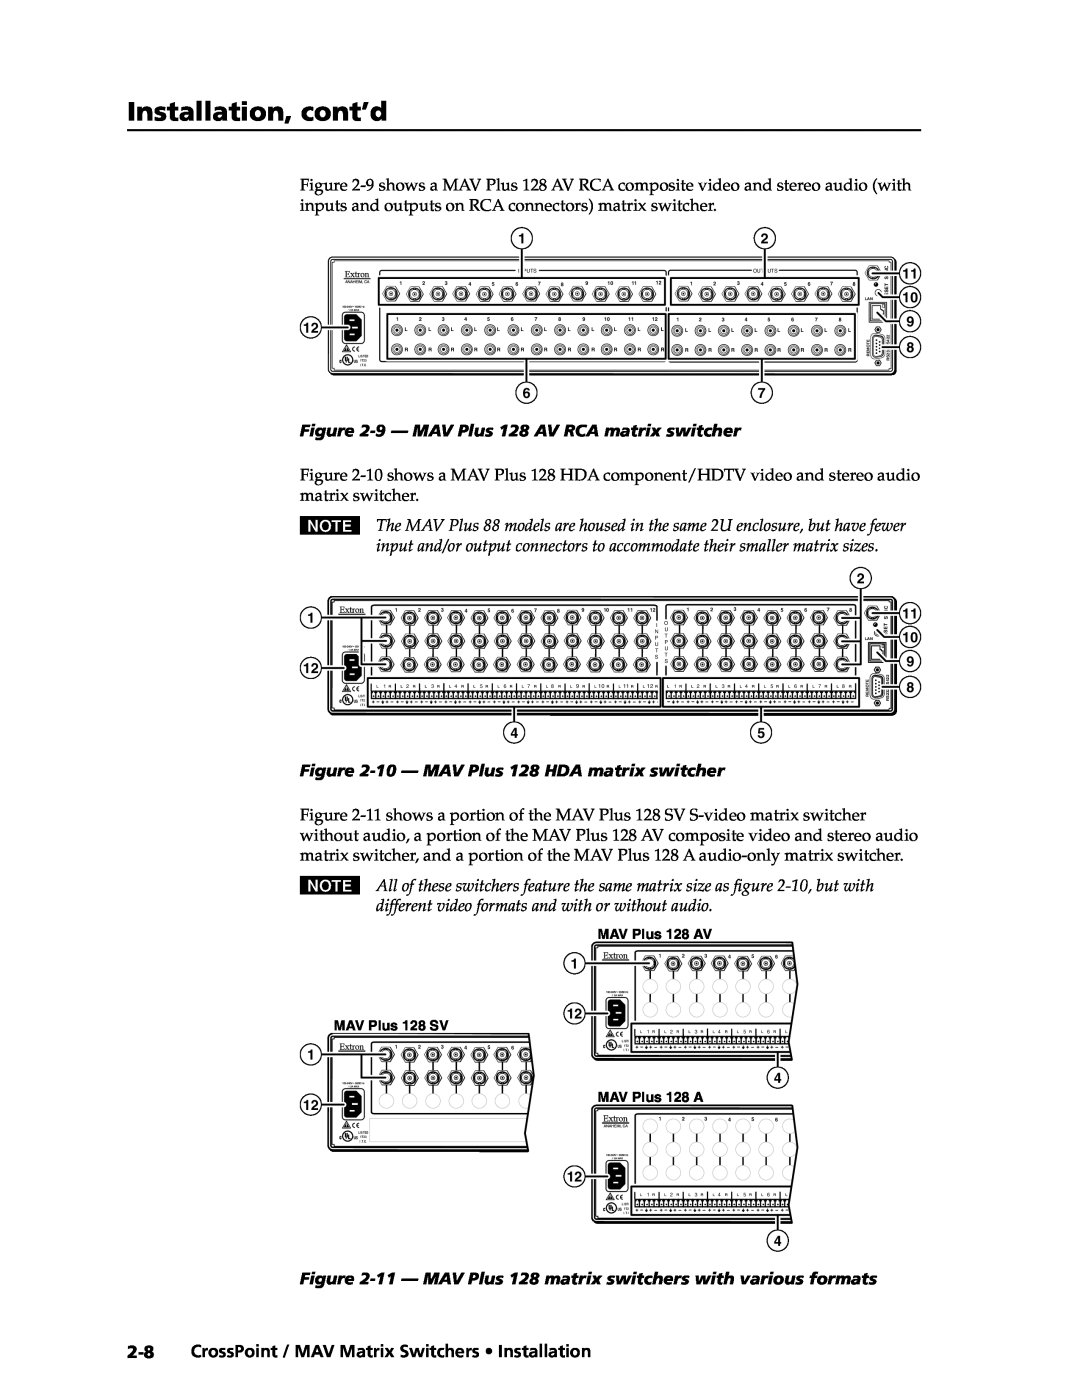 Extron electronic MAV Plus Series Installation, cont’d, 9 - MAV Plus 128 AV RCA matrix switcher, Inputs, Outputs, Sync 